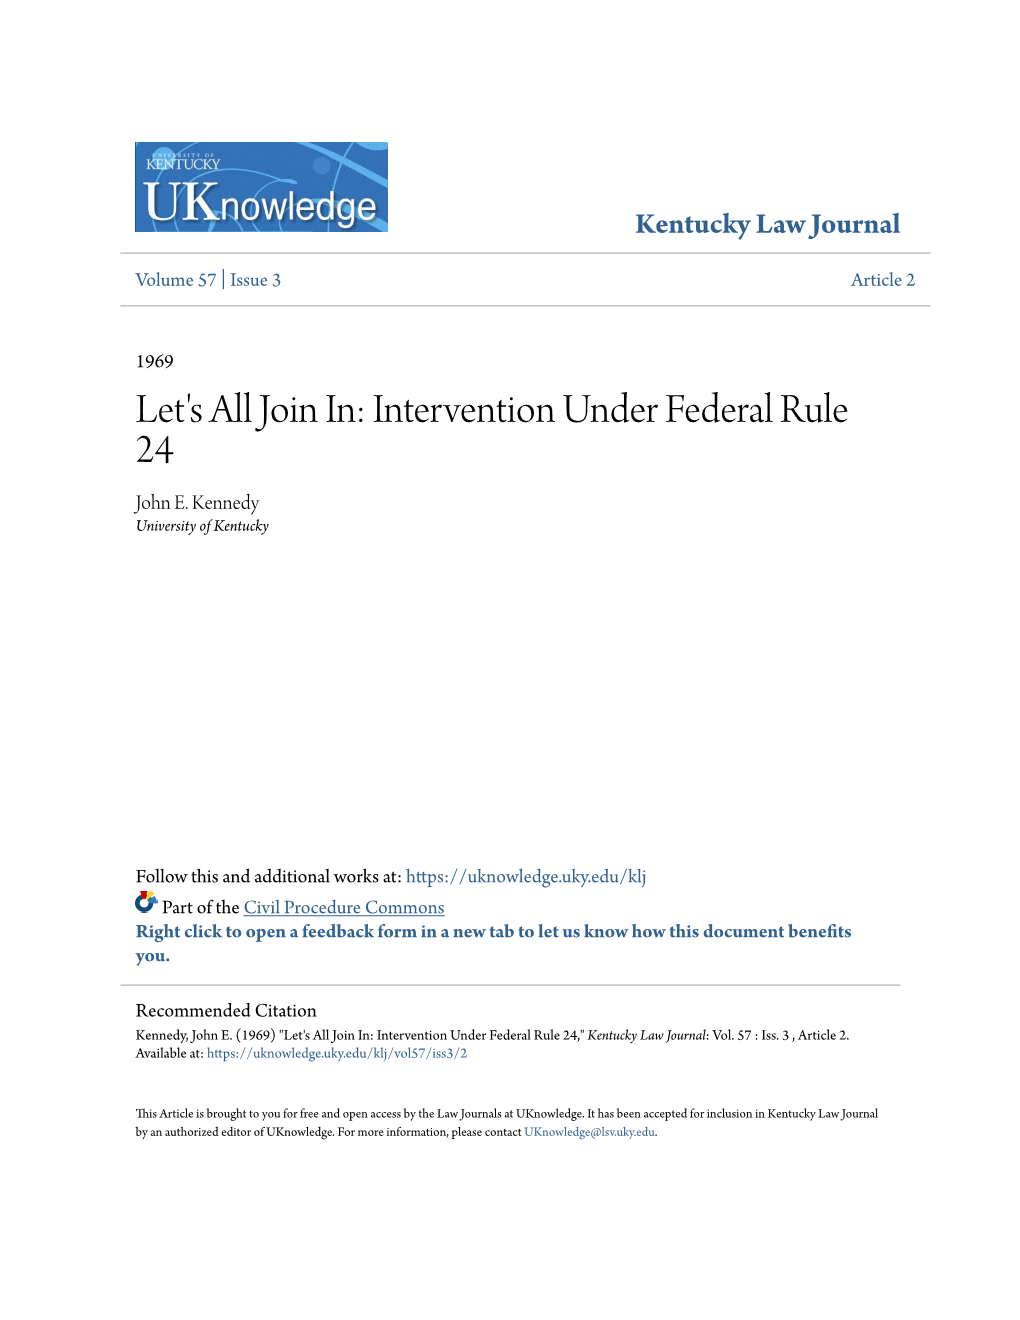 Intervention Under Federal Rule 24 John E